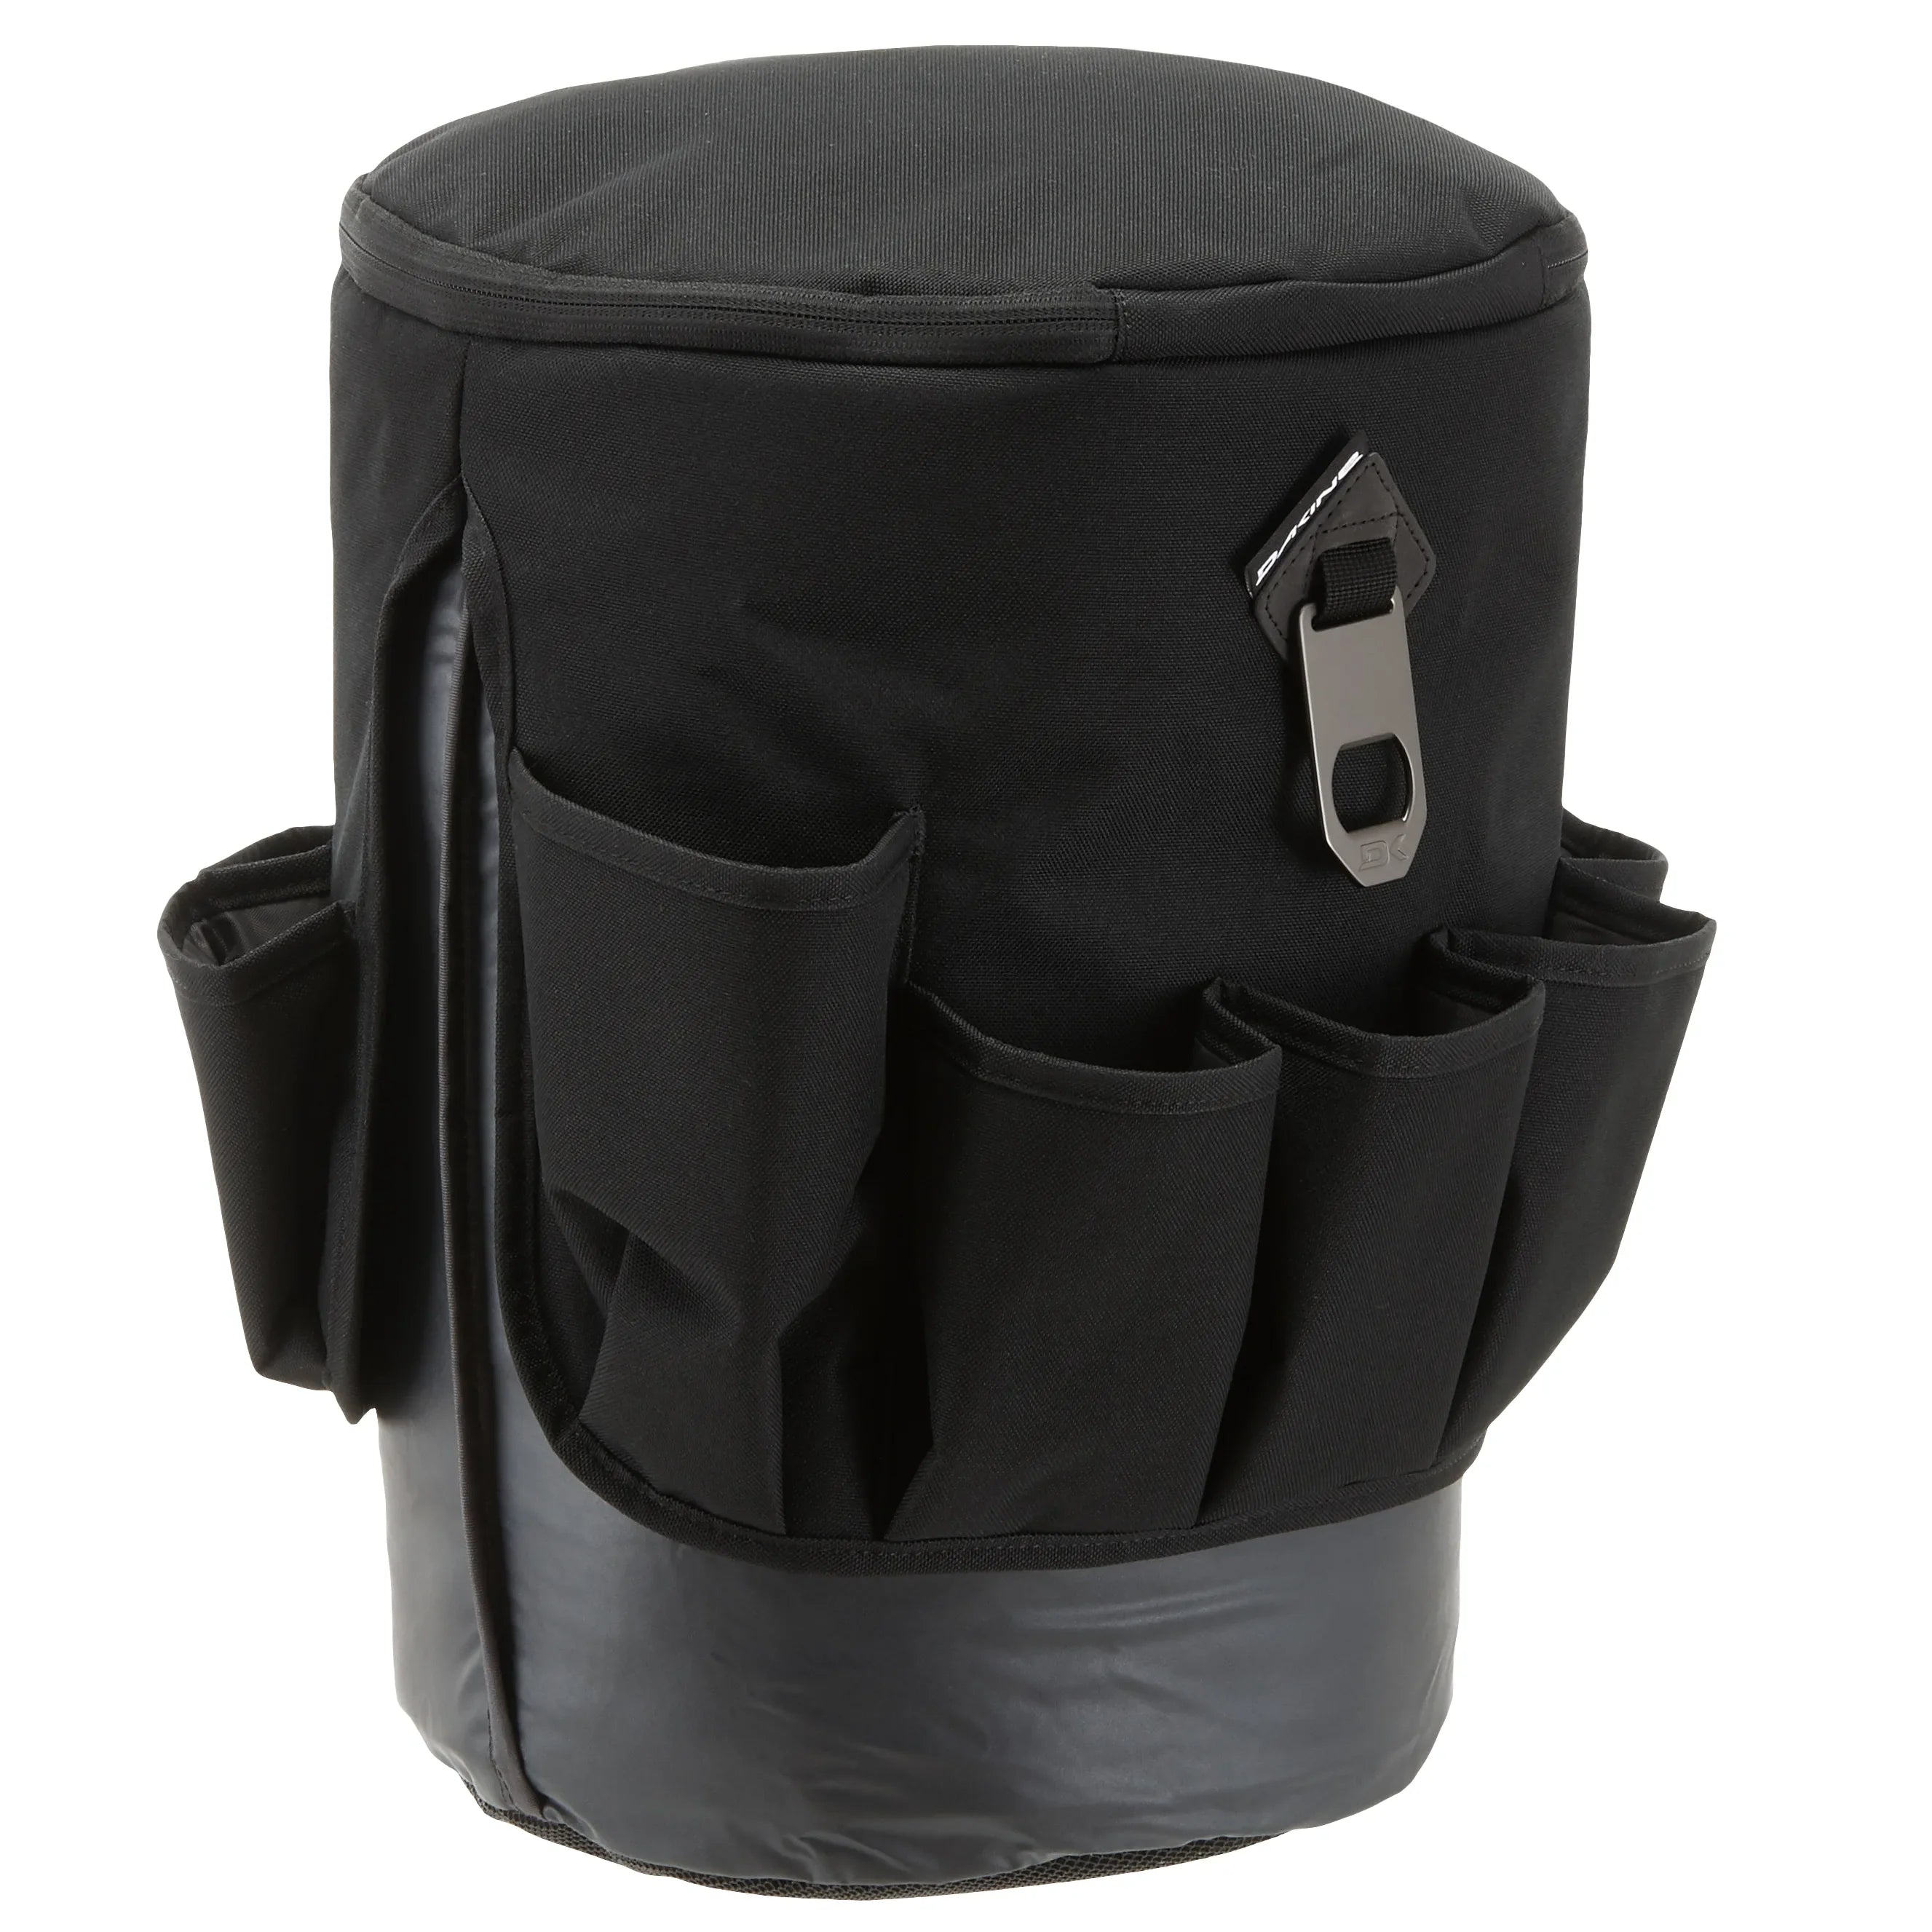 Dakine Boys Packs Party Bucket cooler bag 38 cm - black